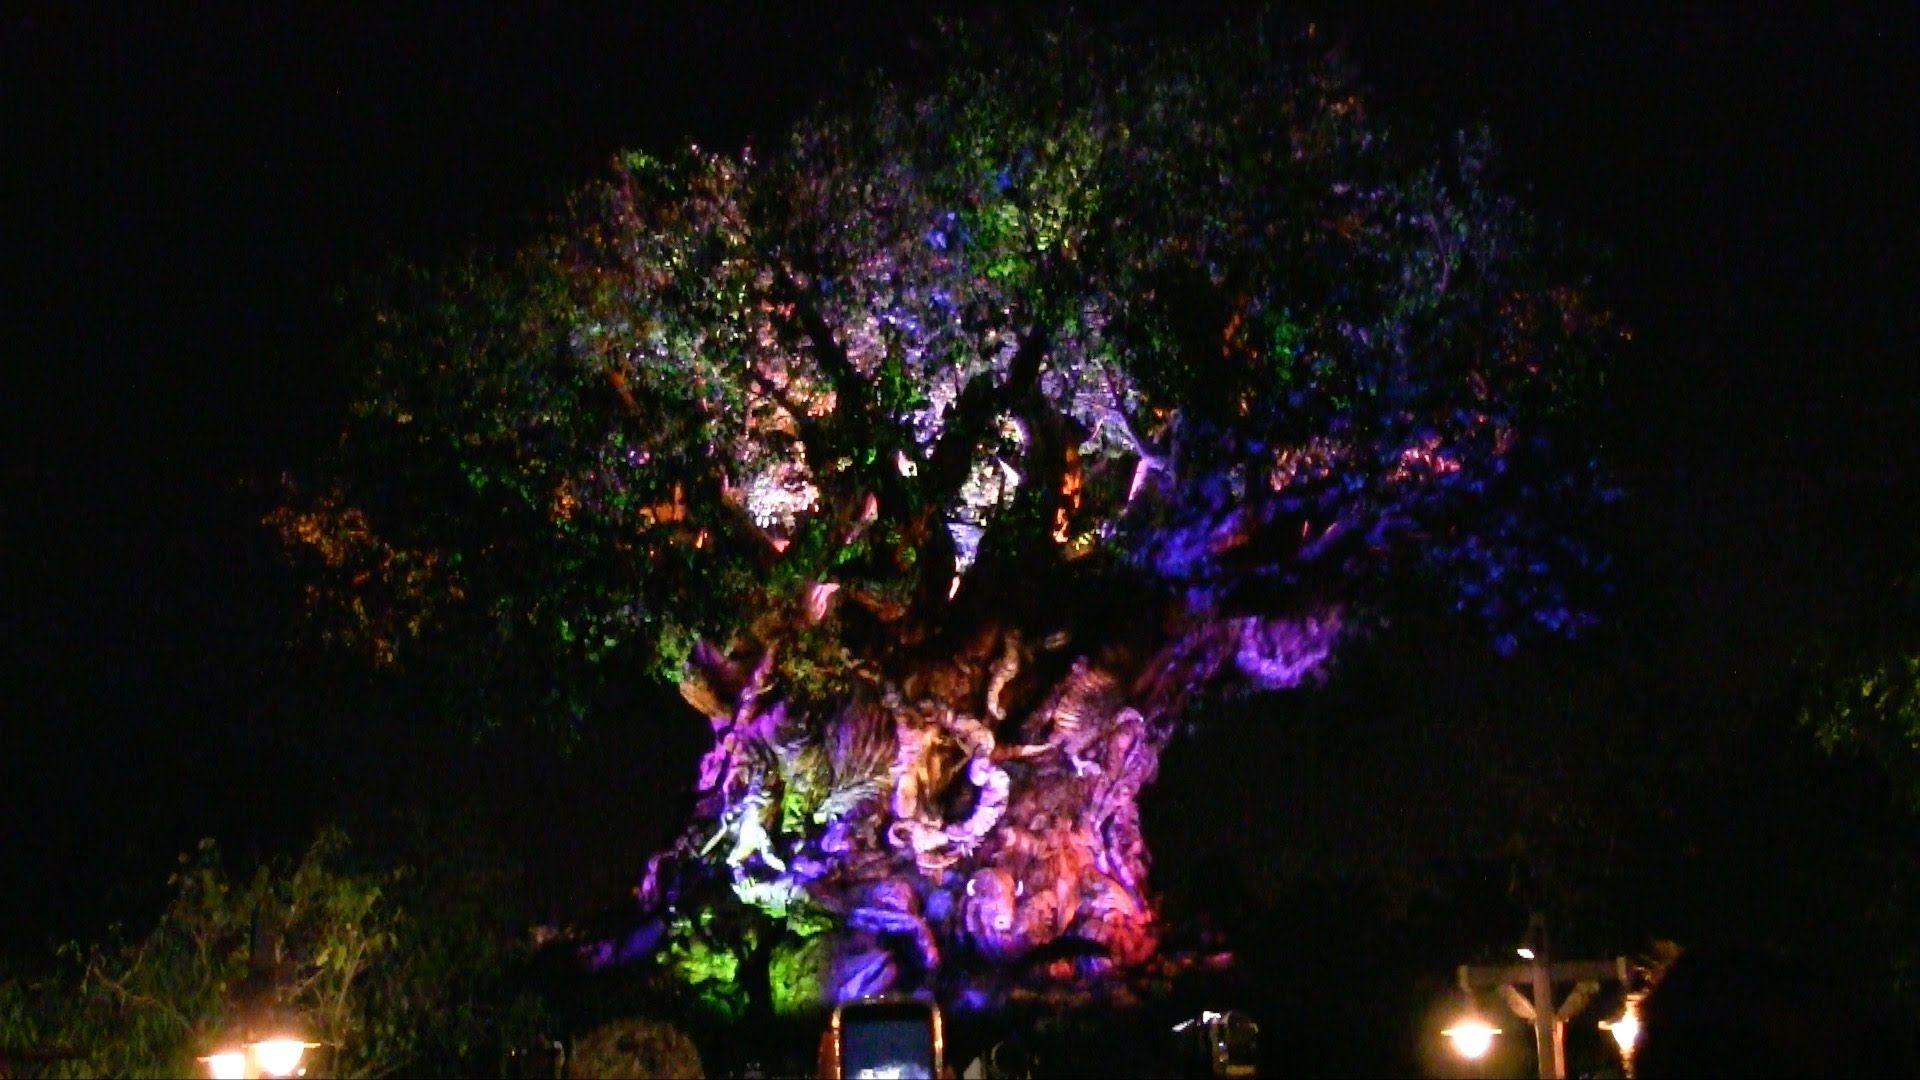 Tree of Life Awakenings at Disney's Animal Kingdom